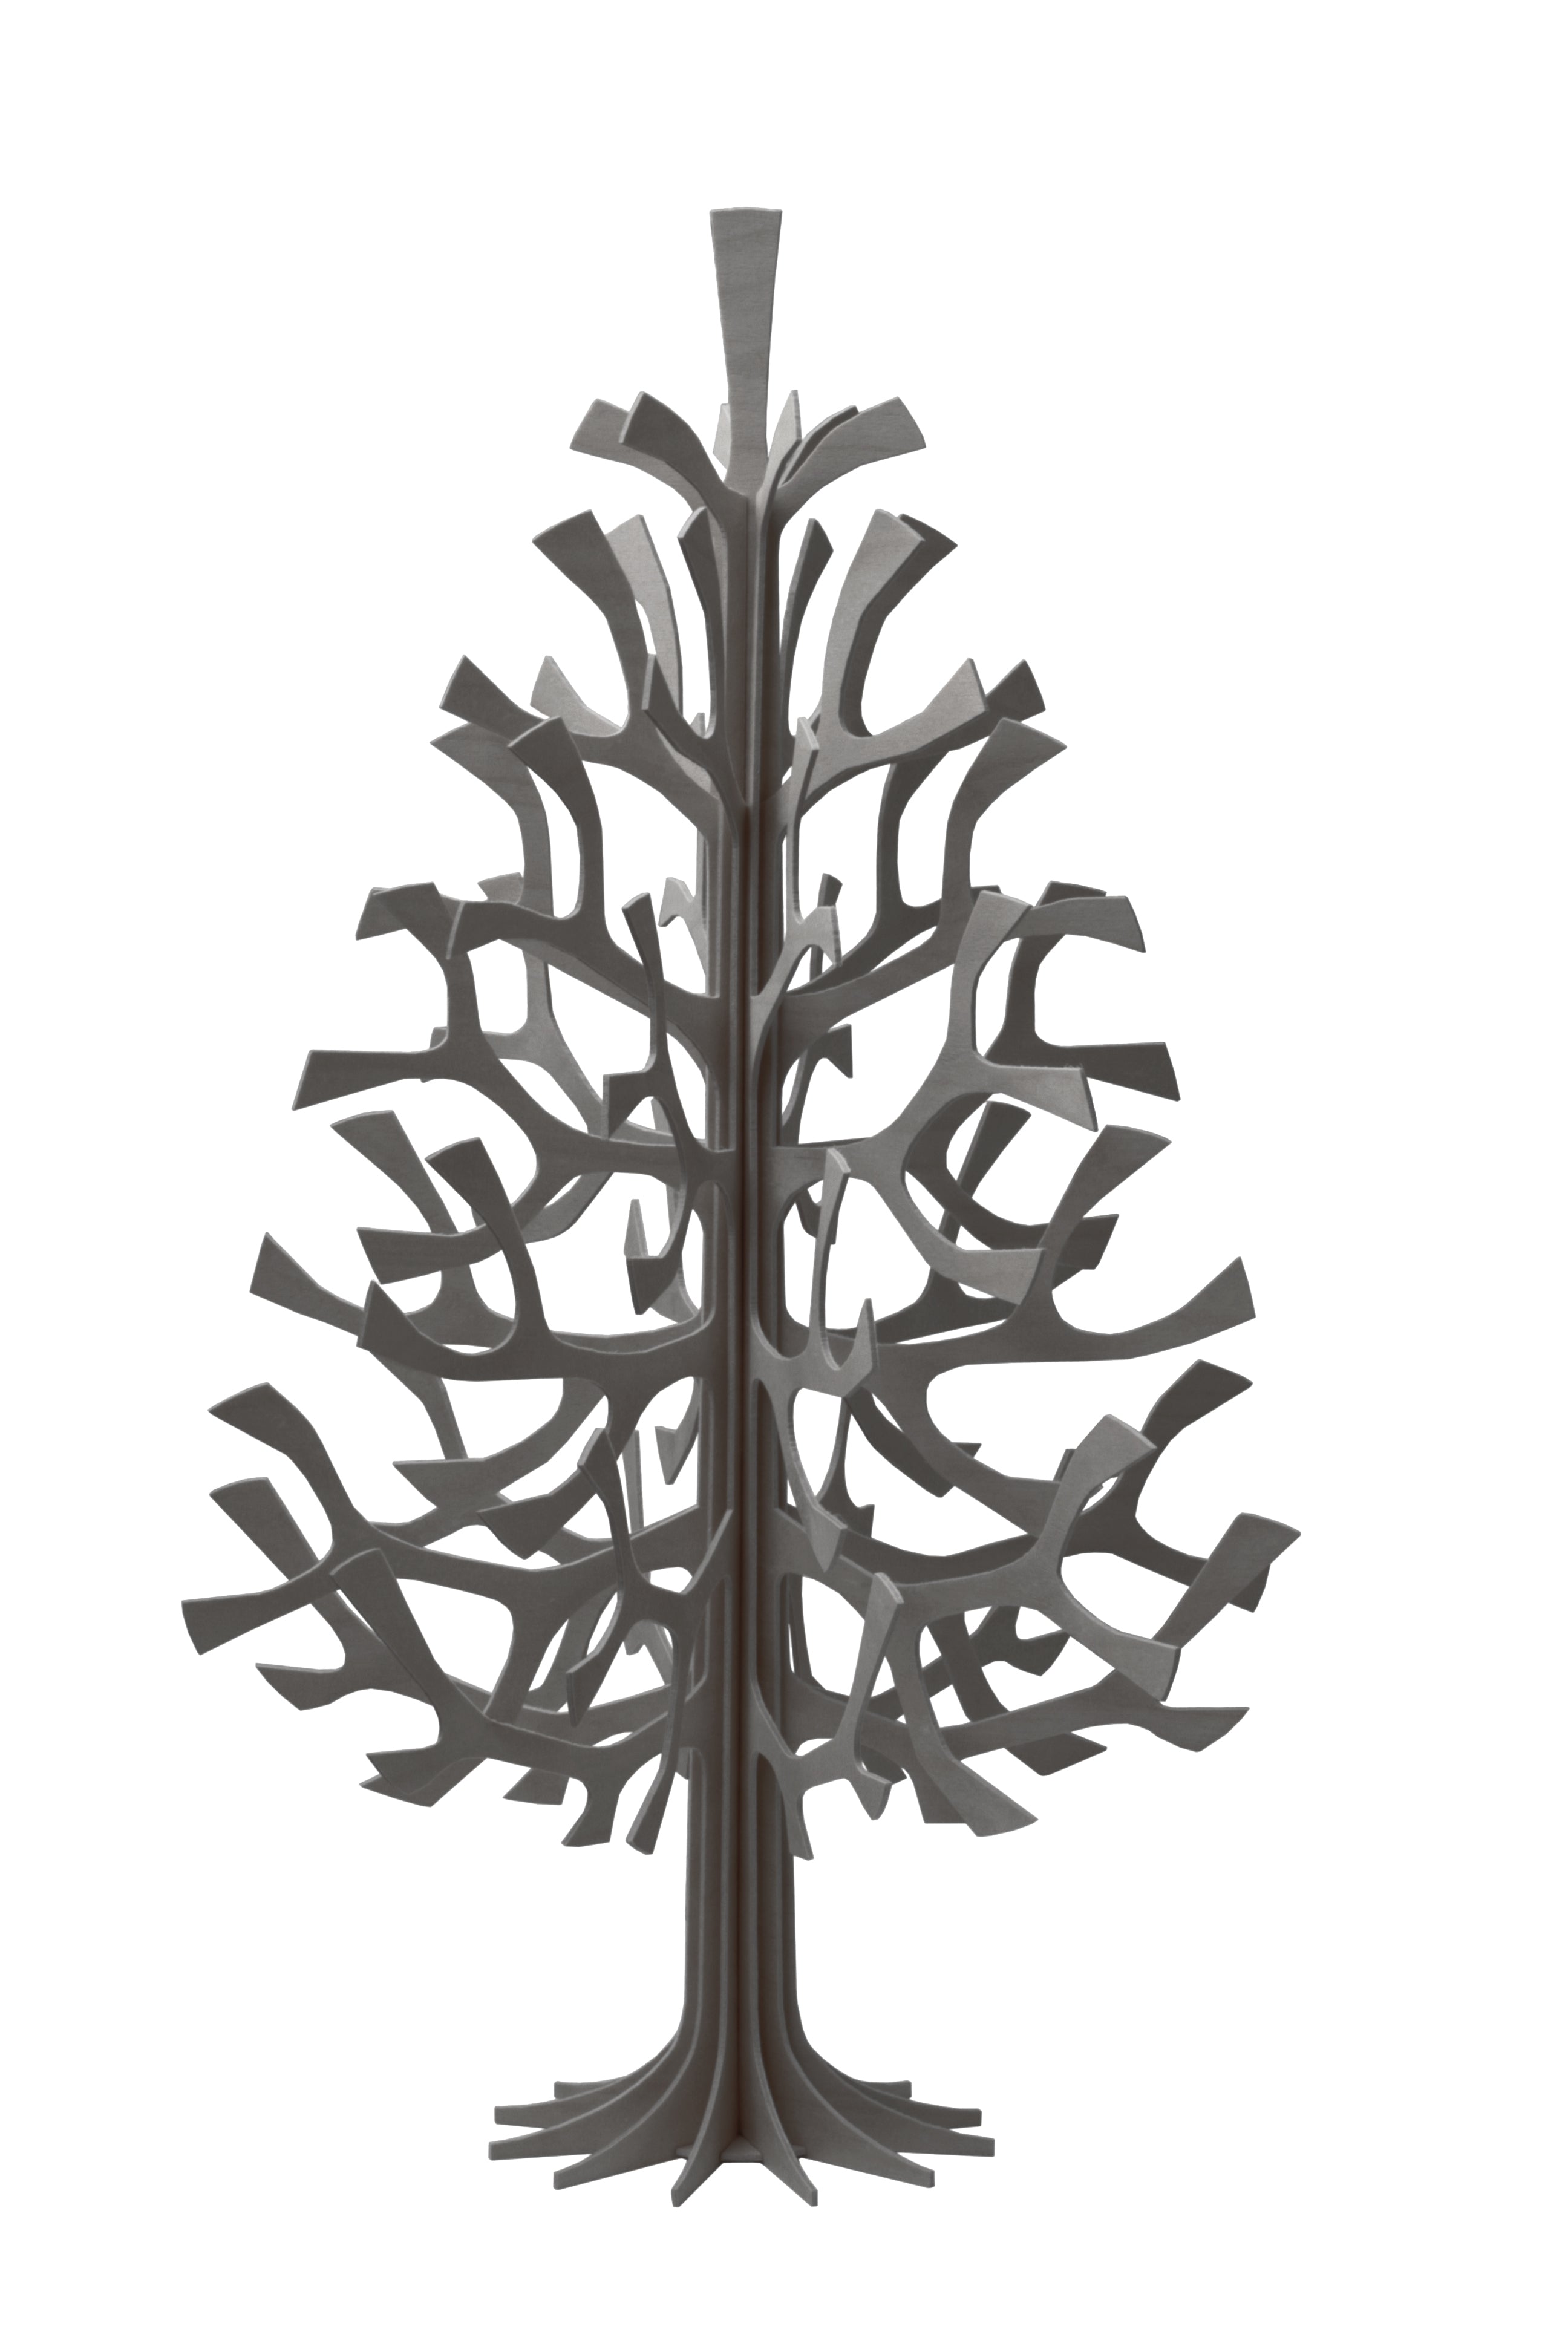 Spruce Tree by Lovi, 100cm / 40in